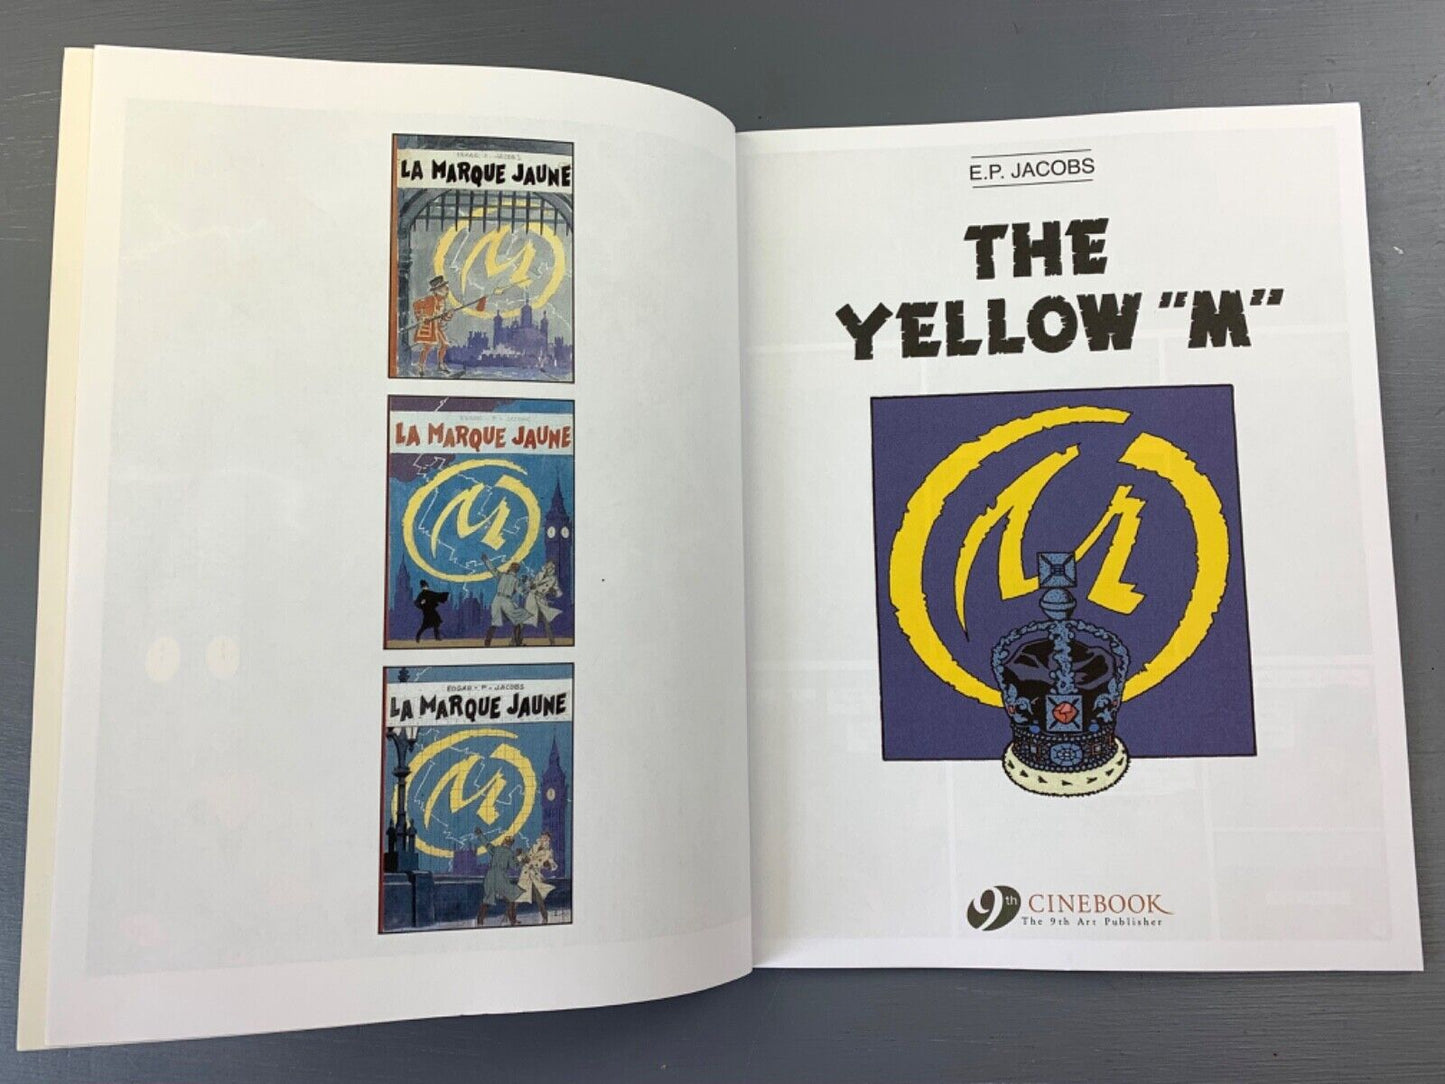 The Yellow ‘M’ - Blake & Mortimer Comic Volume 1 - Cinebook UK Paperback Edition